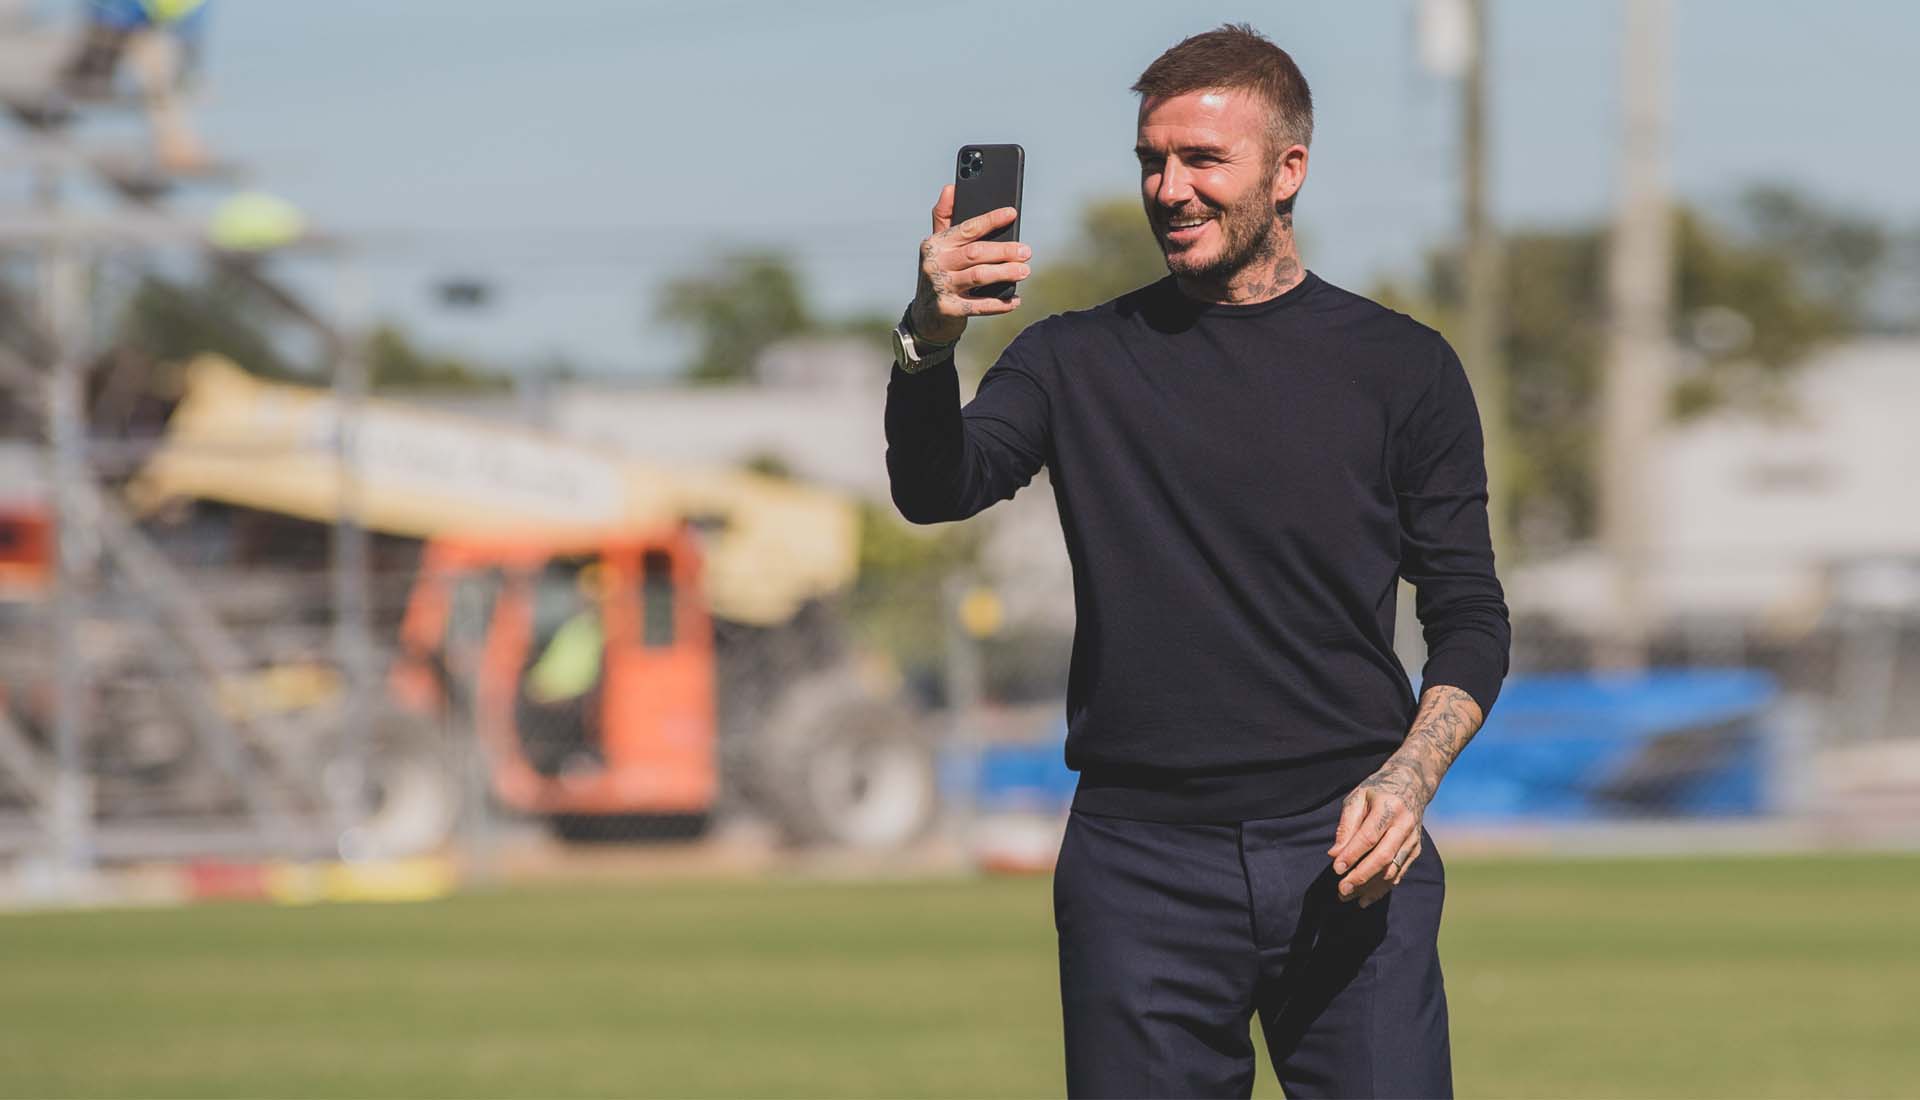 Ralph Lauren Creates Custom Inter Miami Suit For David Beckham - SoccerBible